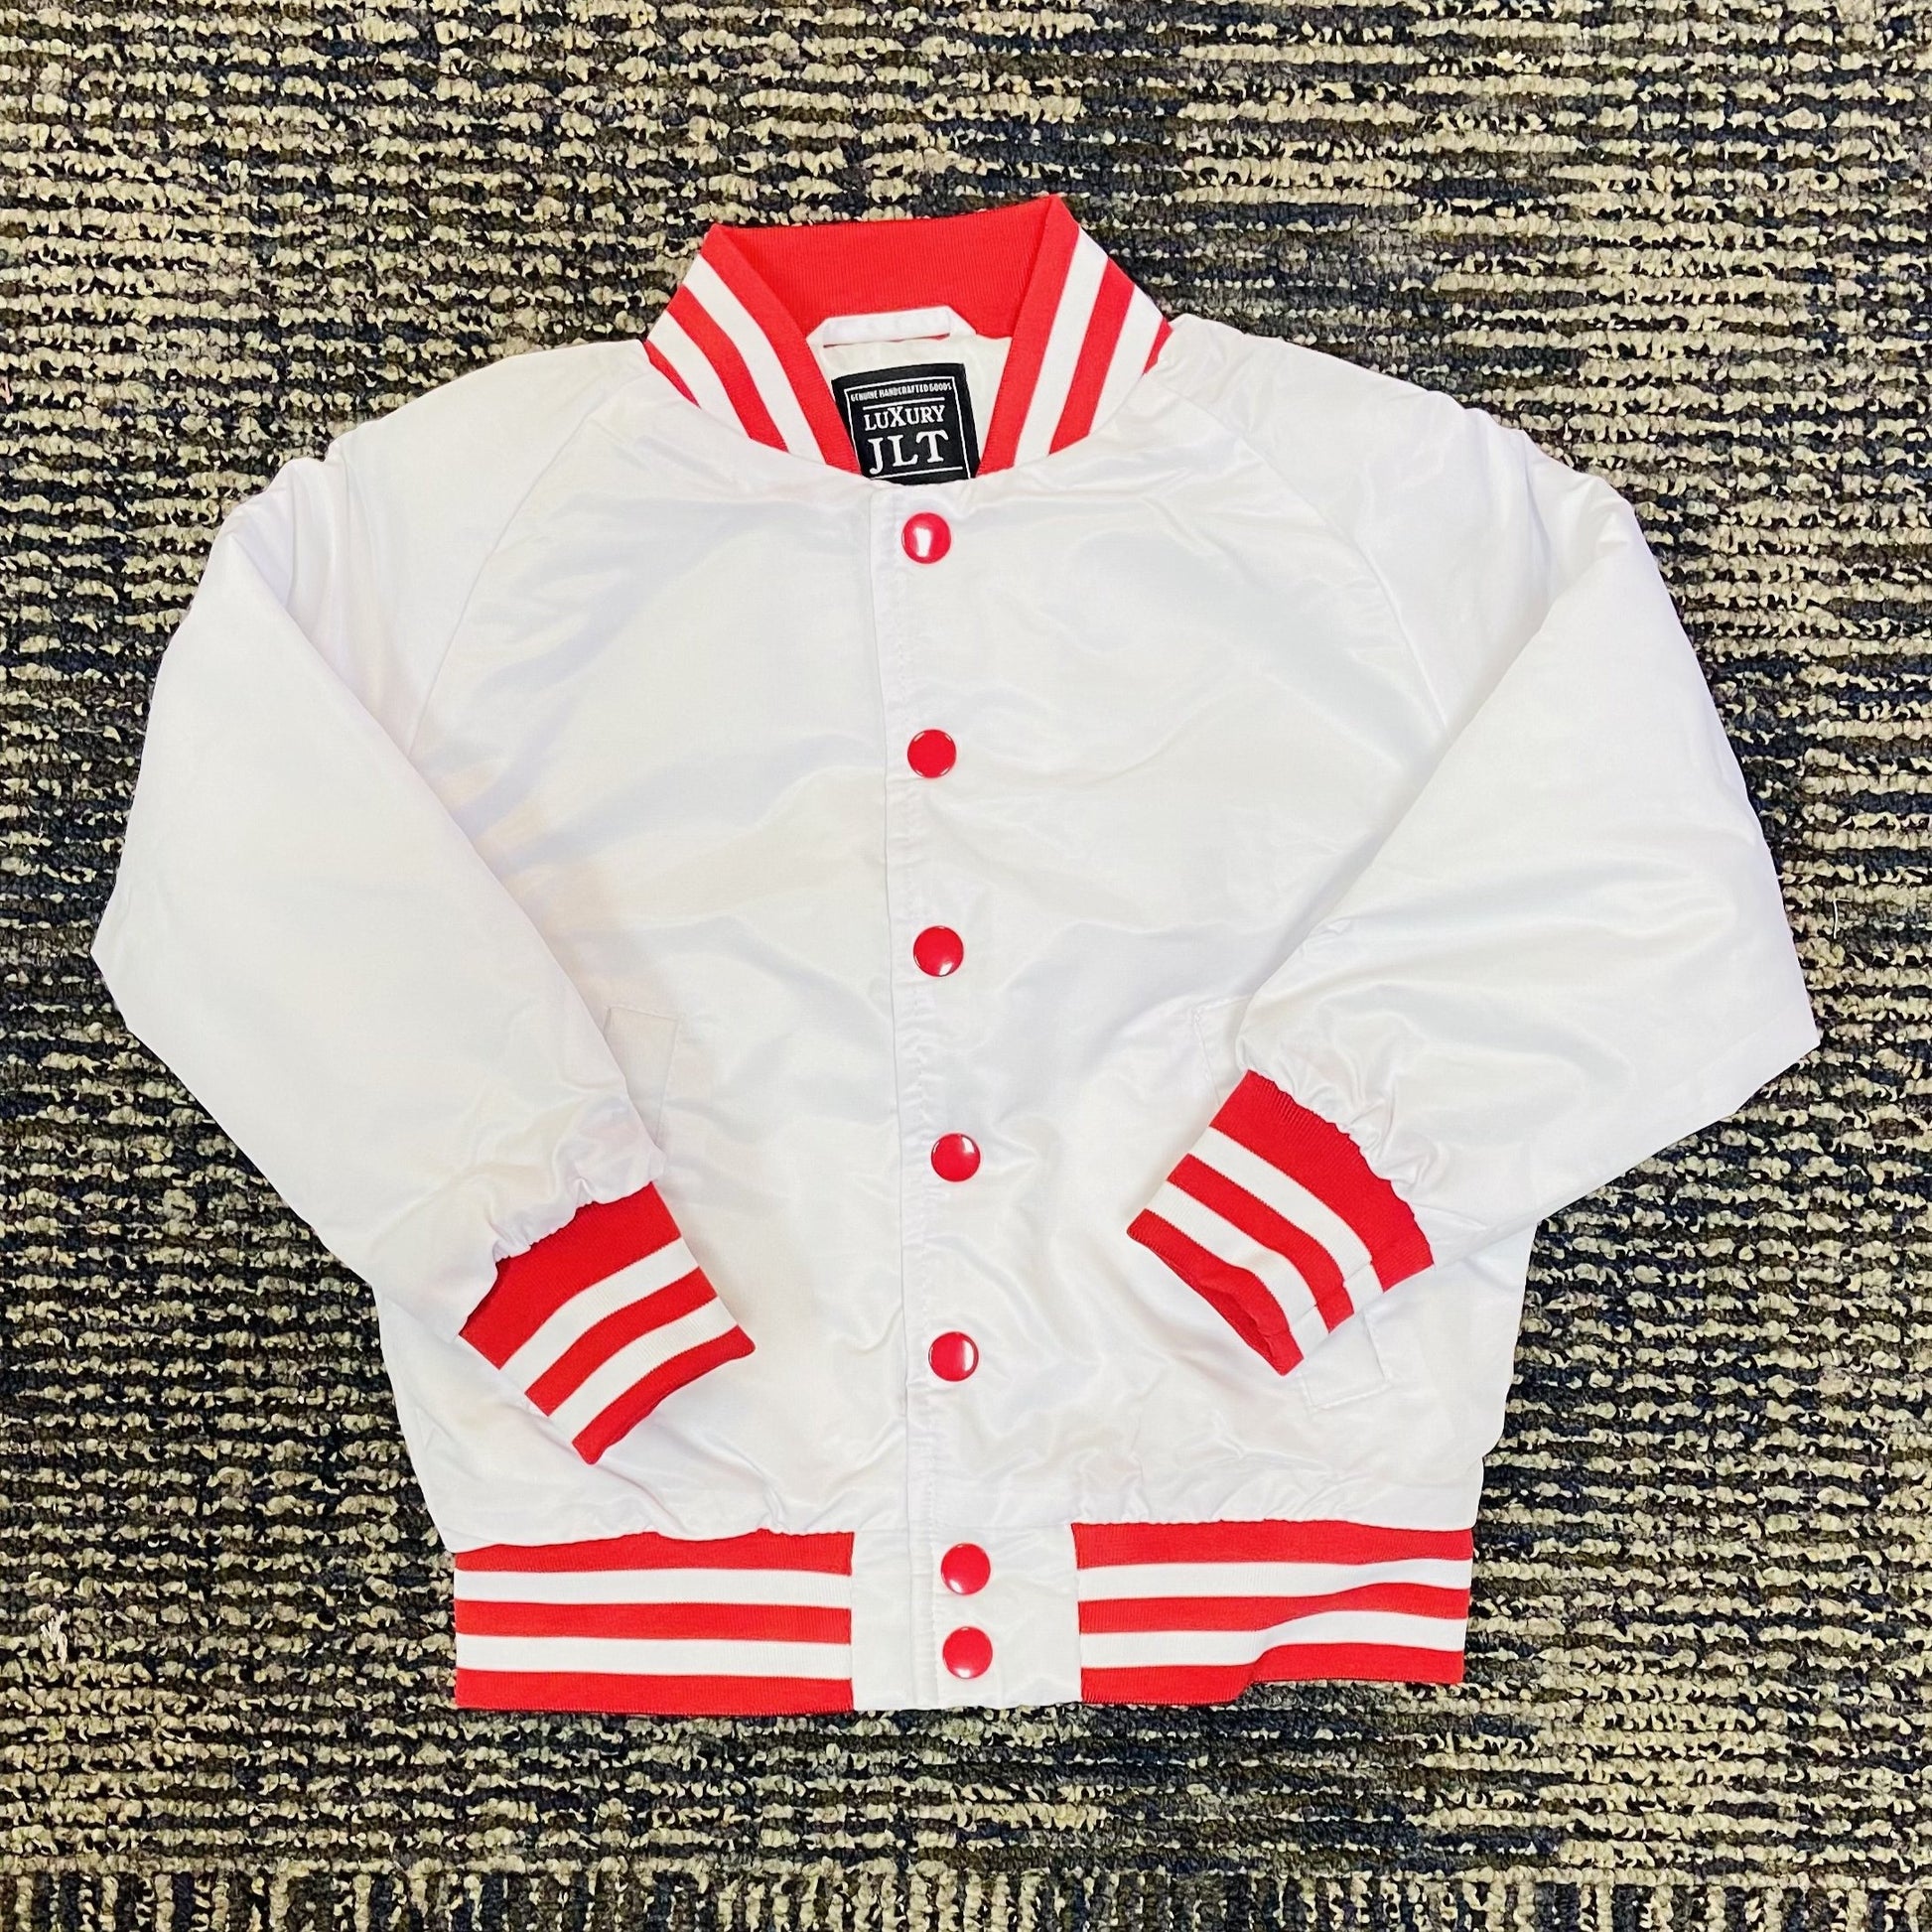 Kid Varsity Jackets with Long Sleeves Letterman Jacket Wholesale